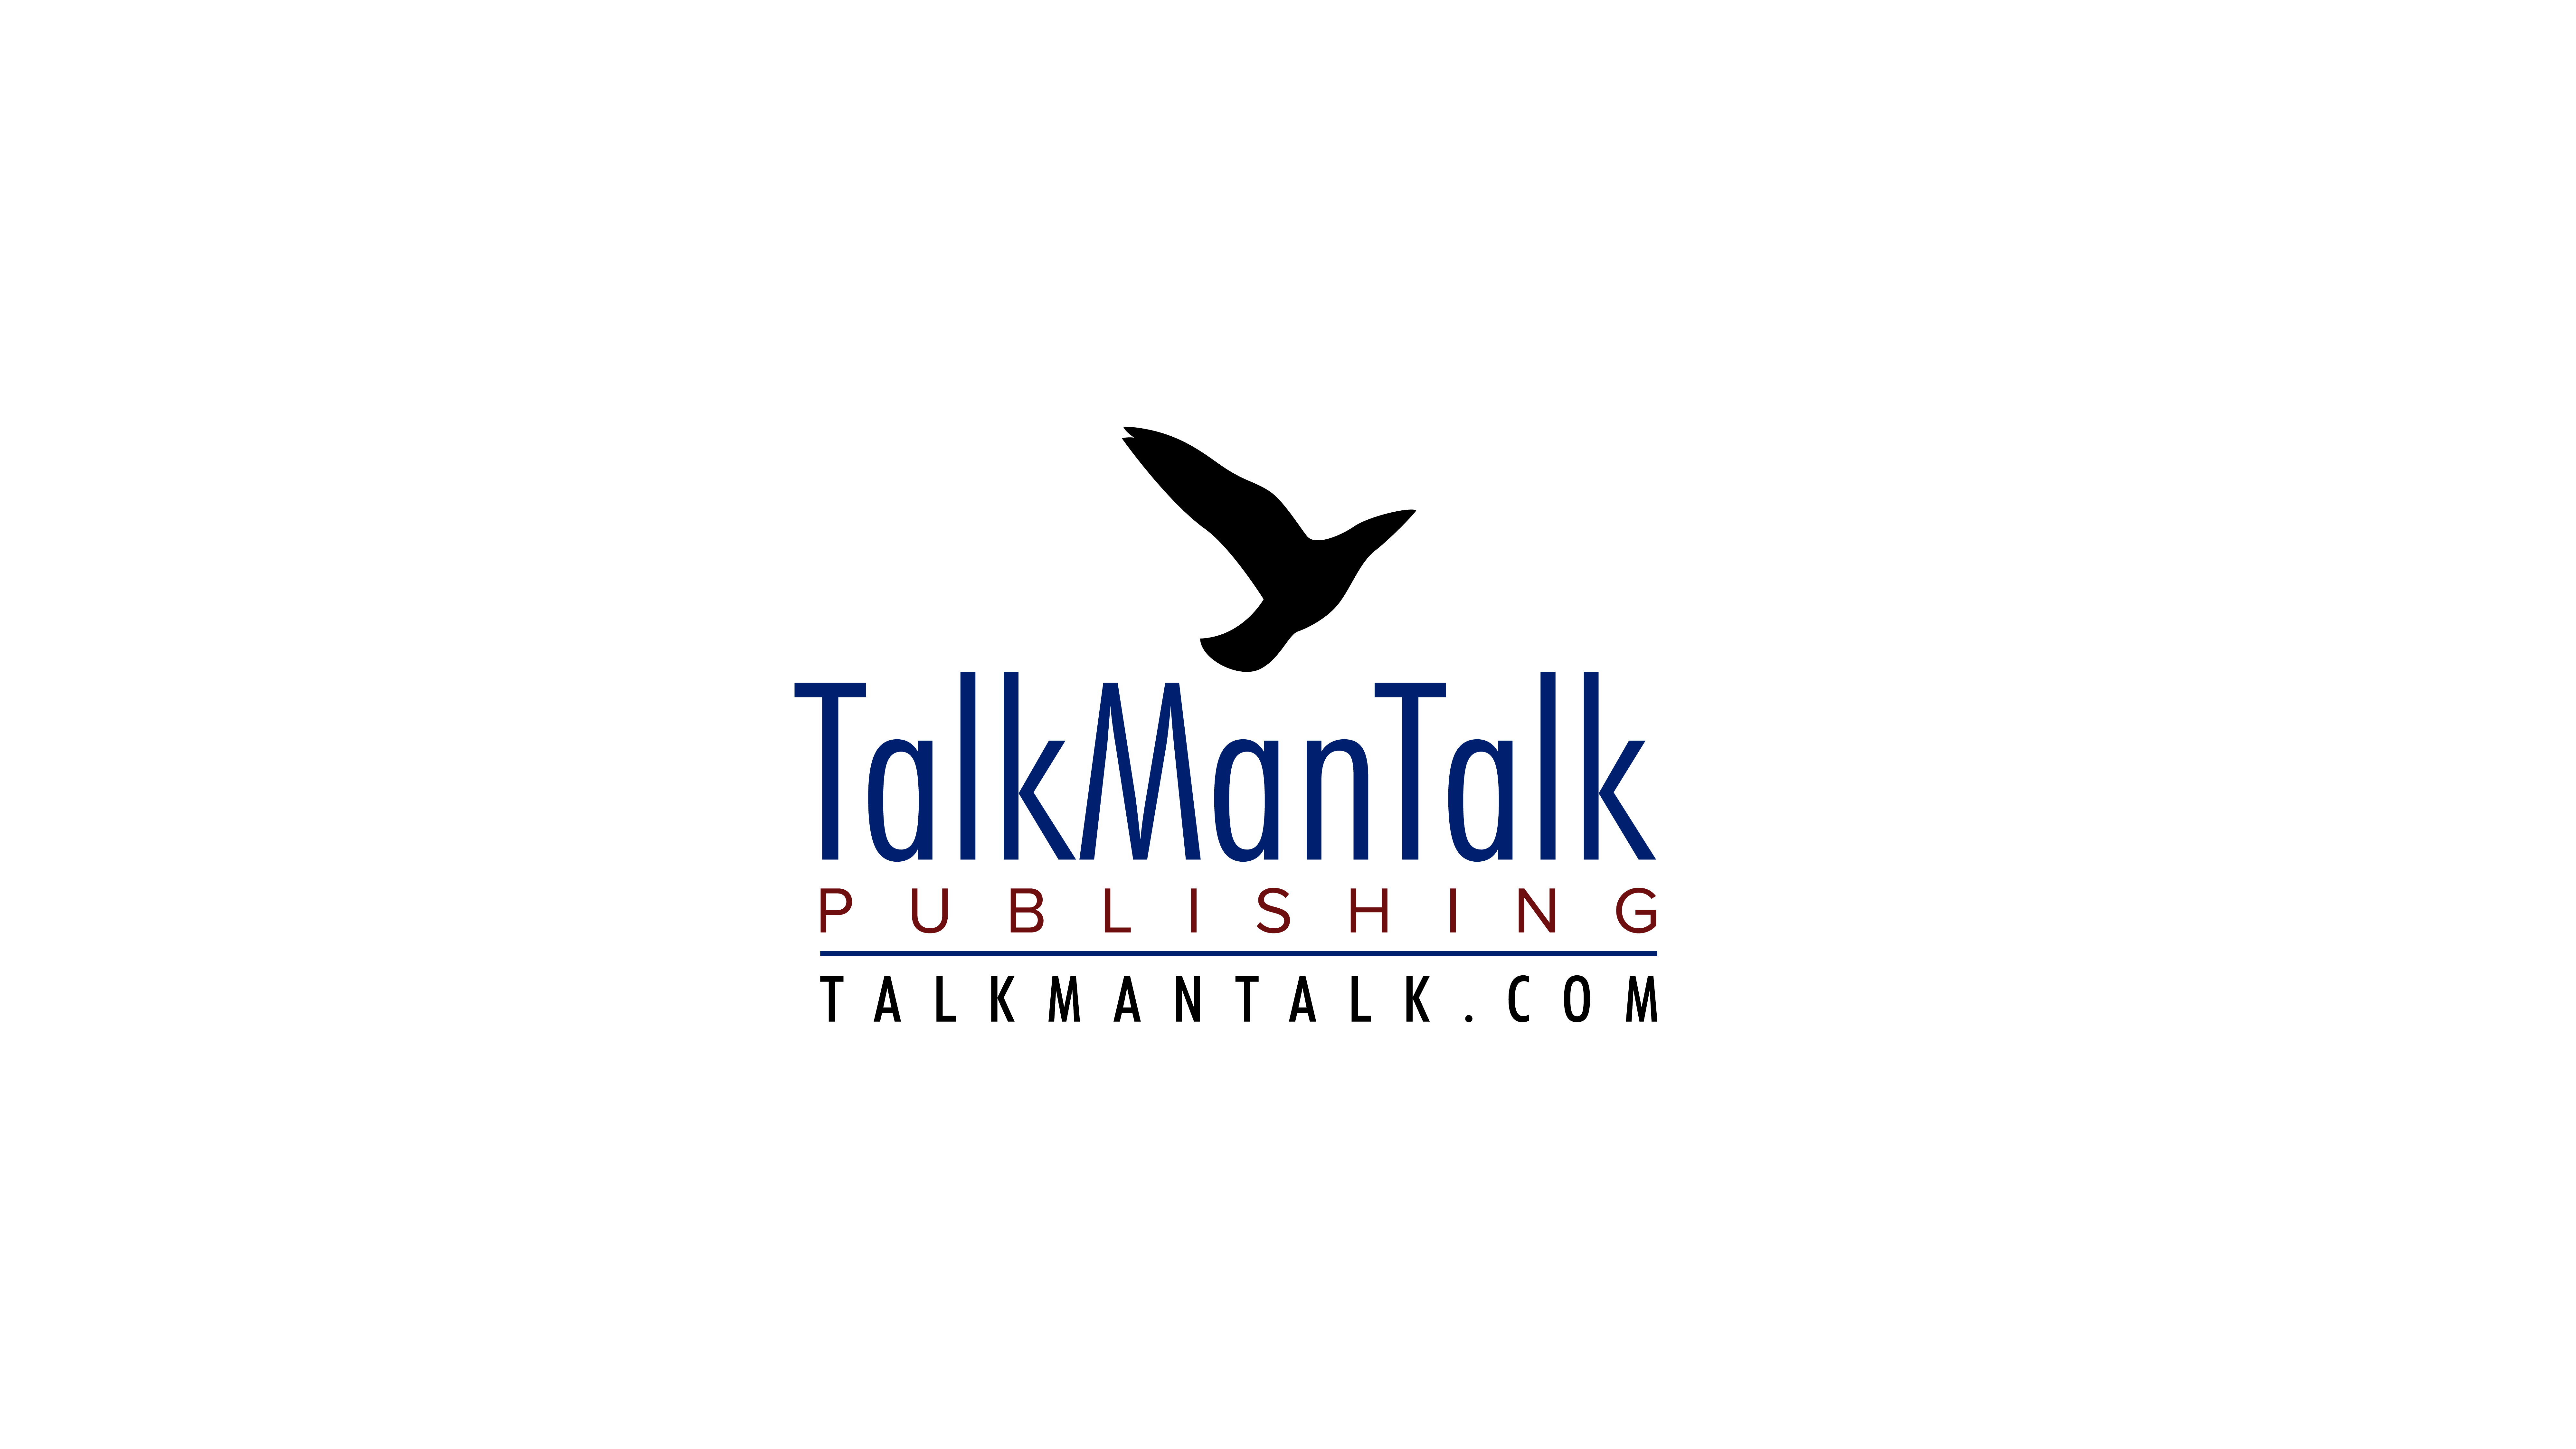 TalkManTalk Publishing, Inc.